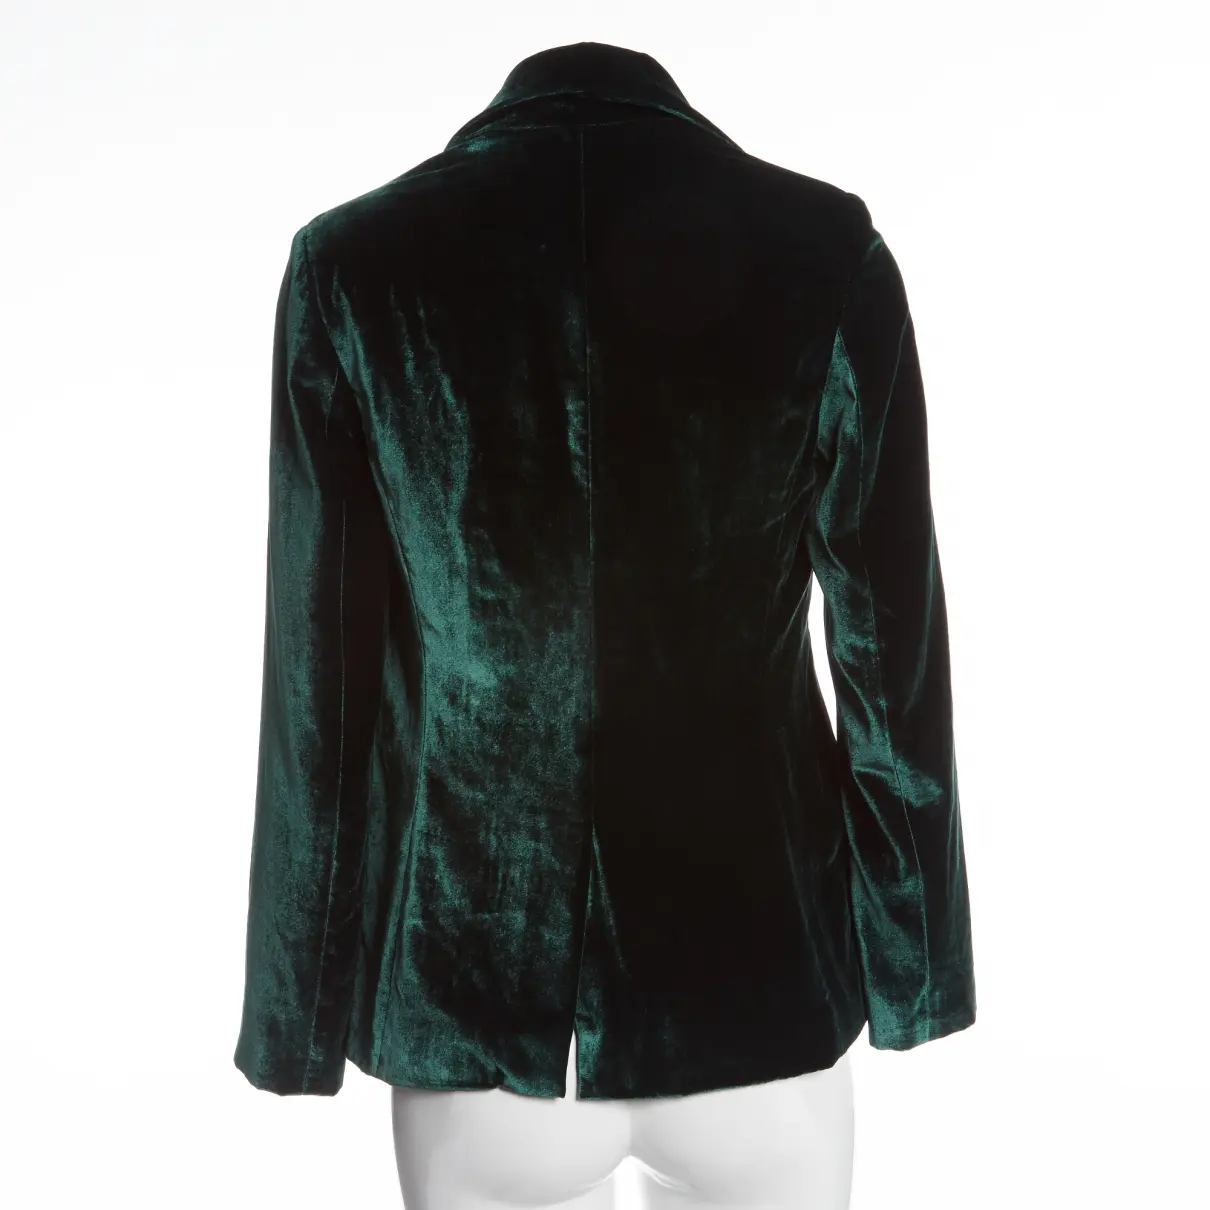 Buy Cushnie Et Ochs Green Viscose Jacket online